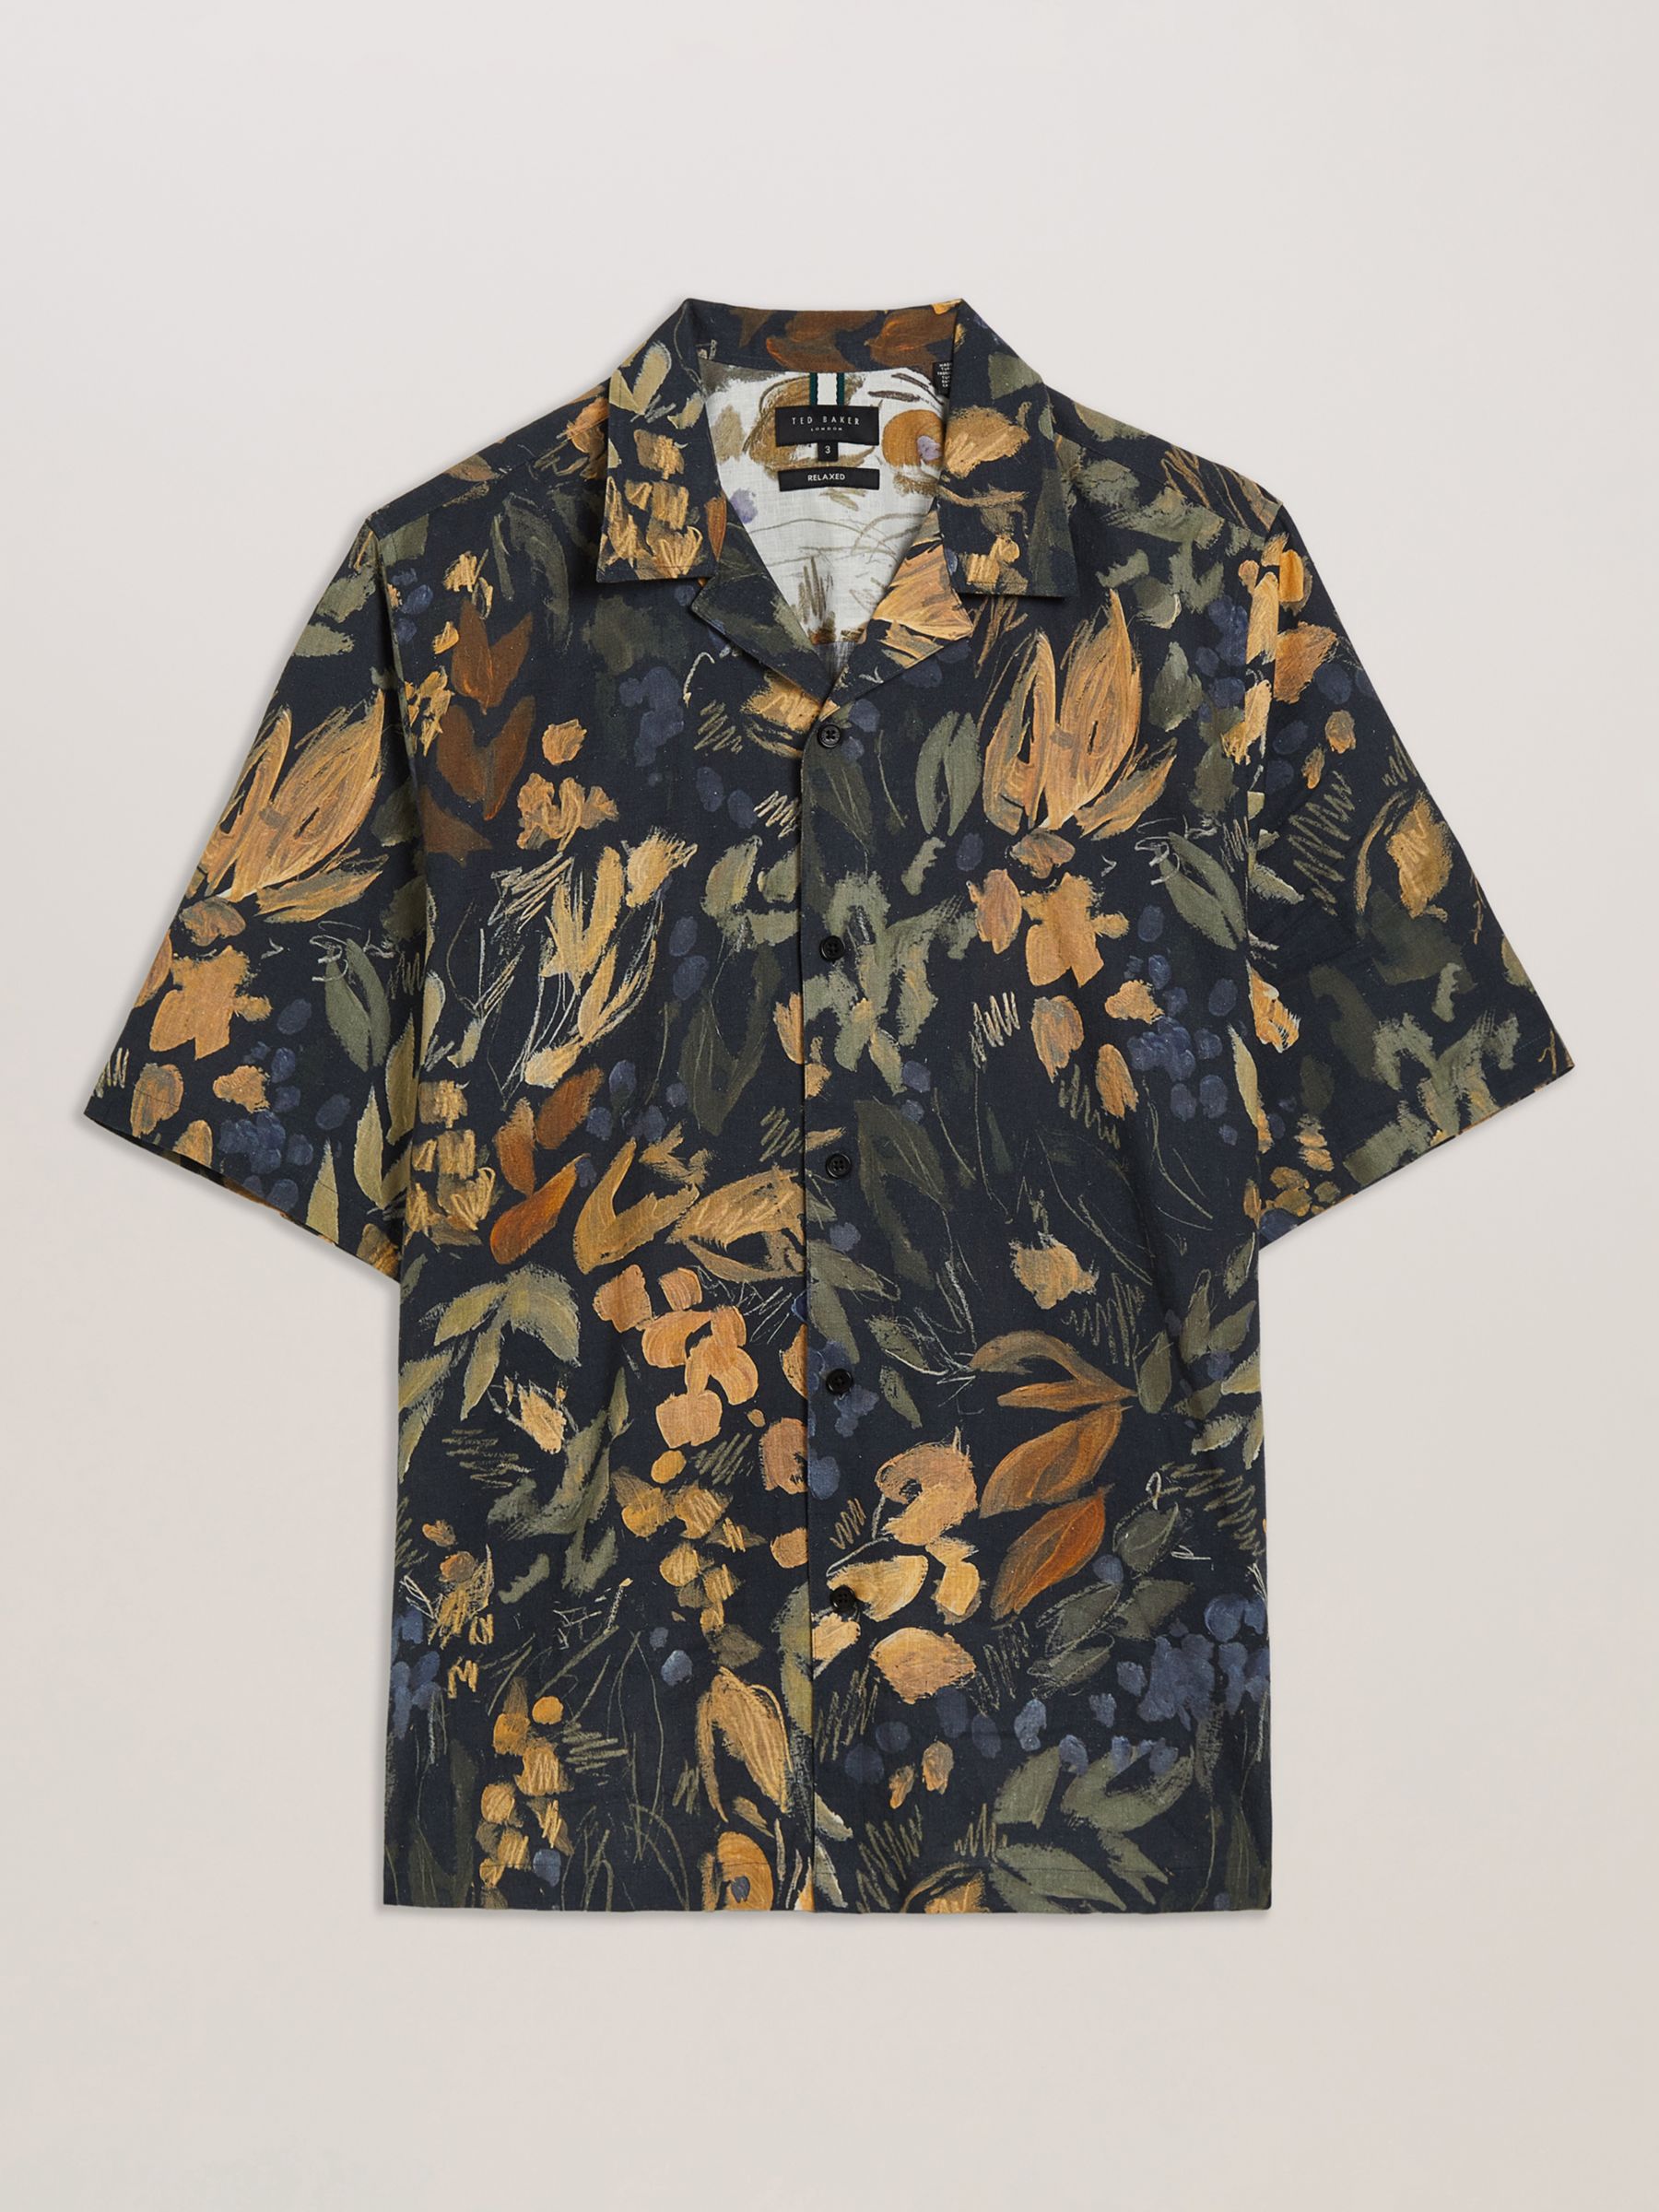 Ted Baker Moselle Short Sleeve Floral Shirt, Black/Multi, S